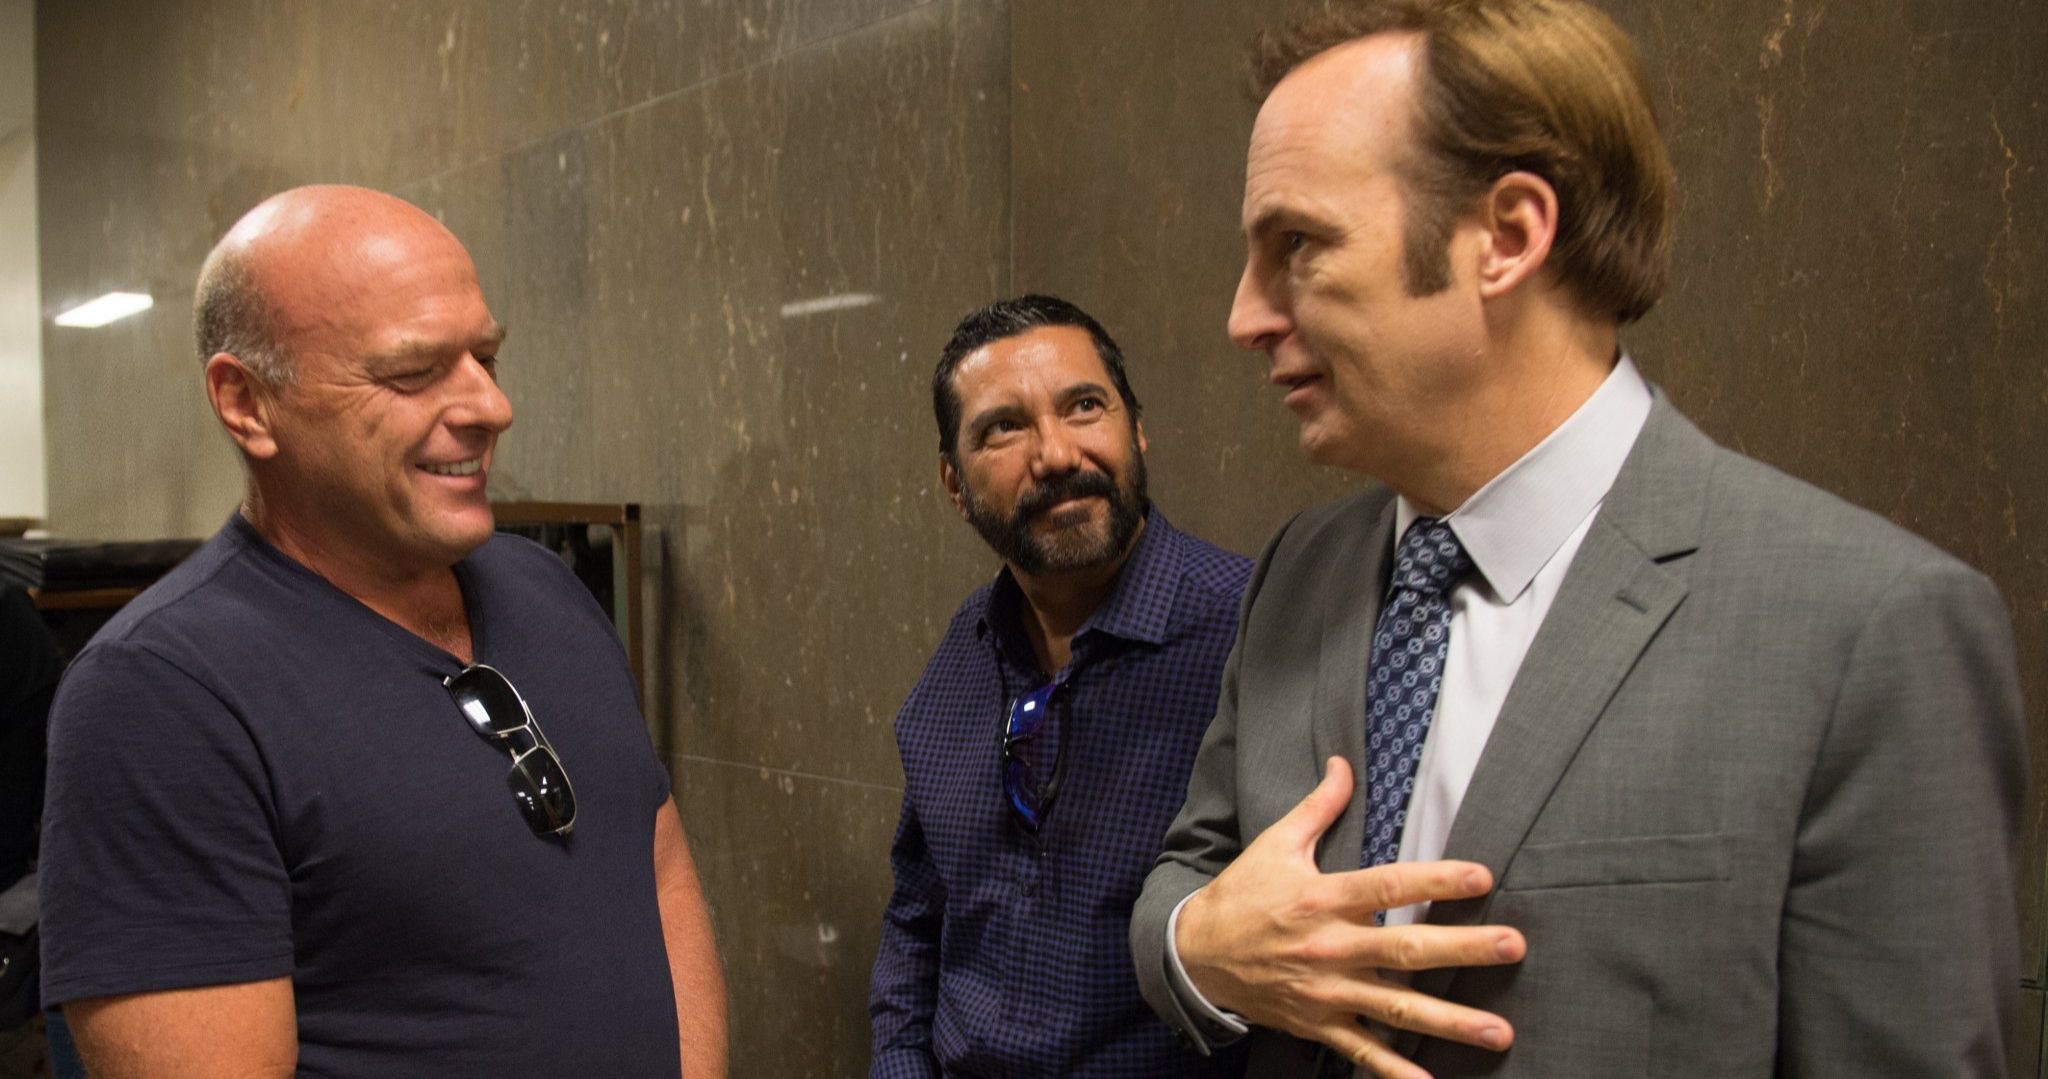 Better Call Saul Season 5 Is Bringing Back Several Breaking Bad Favorites